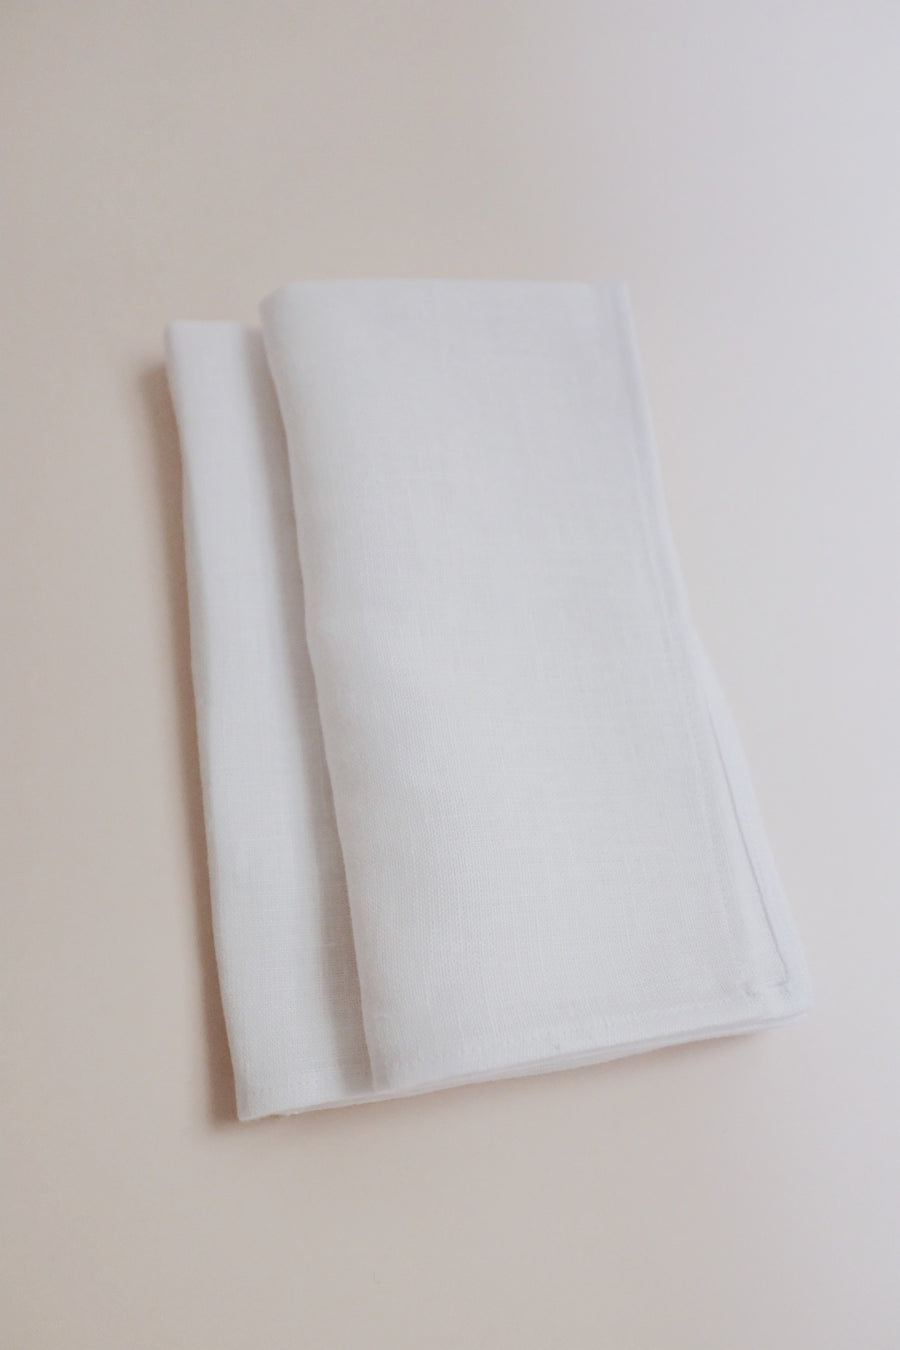 Linen Napkin in White